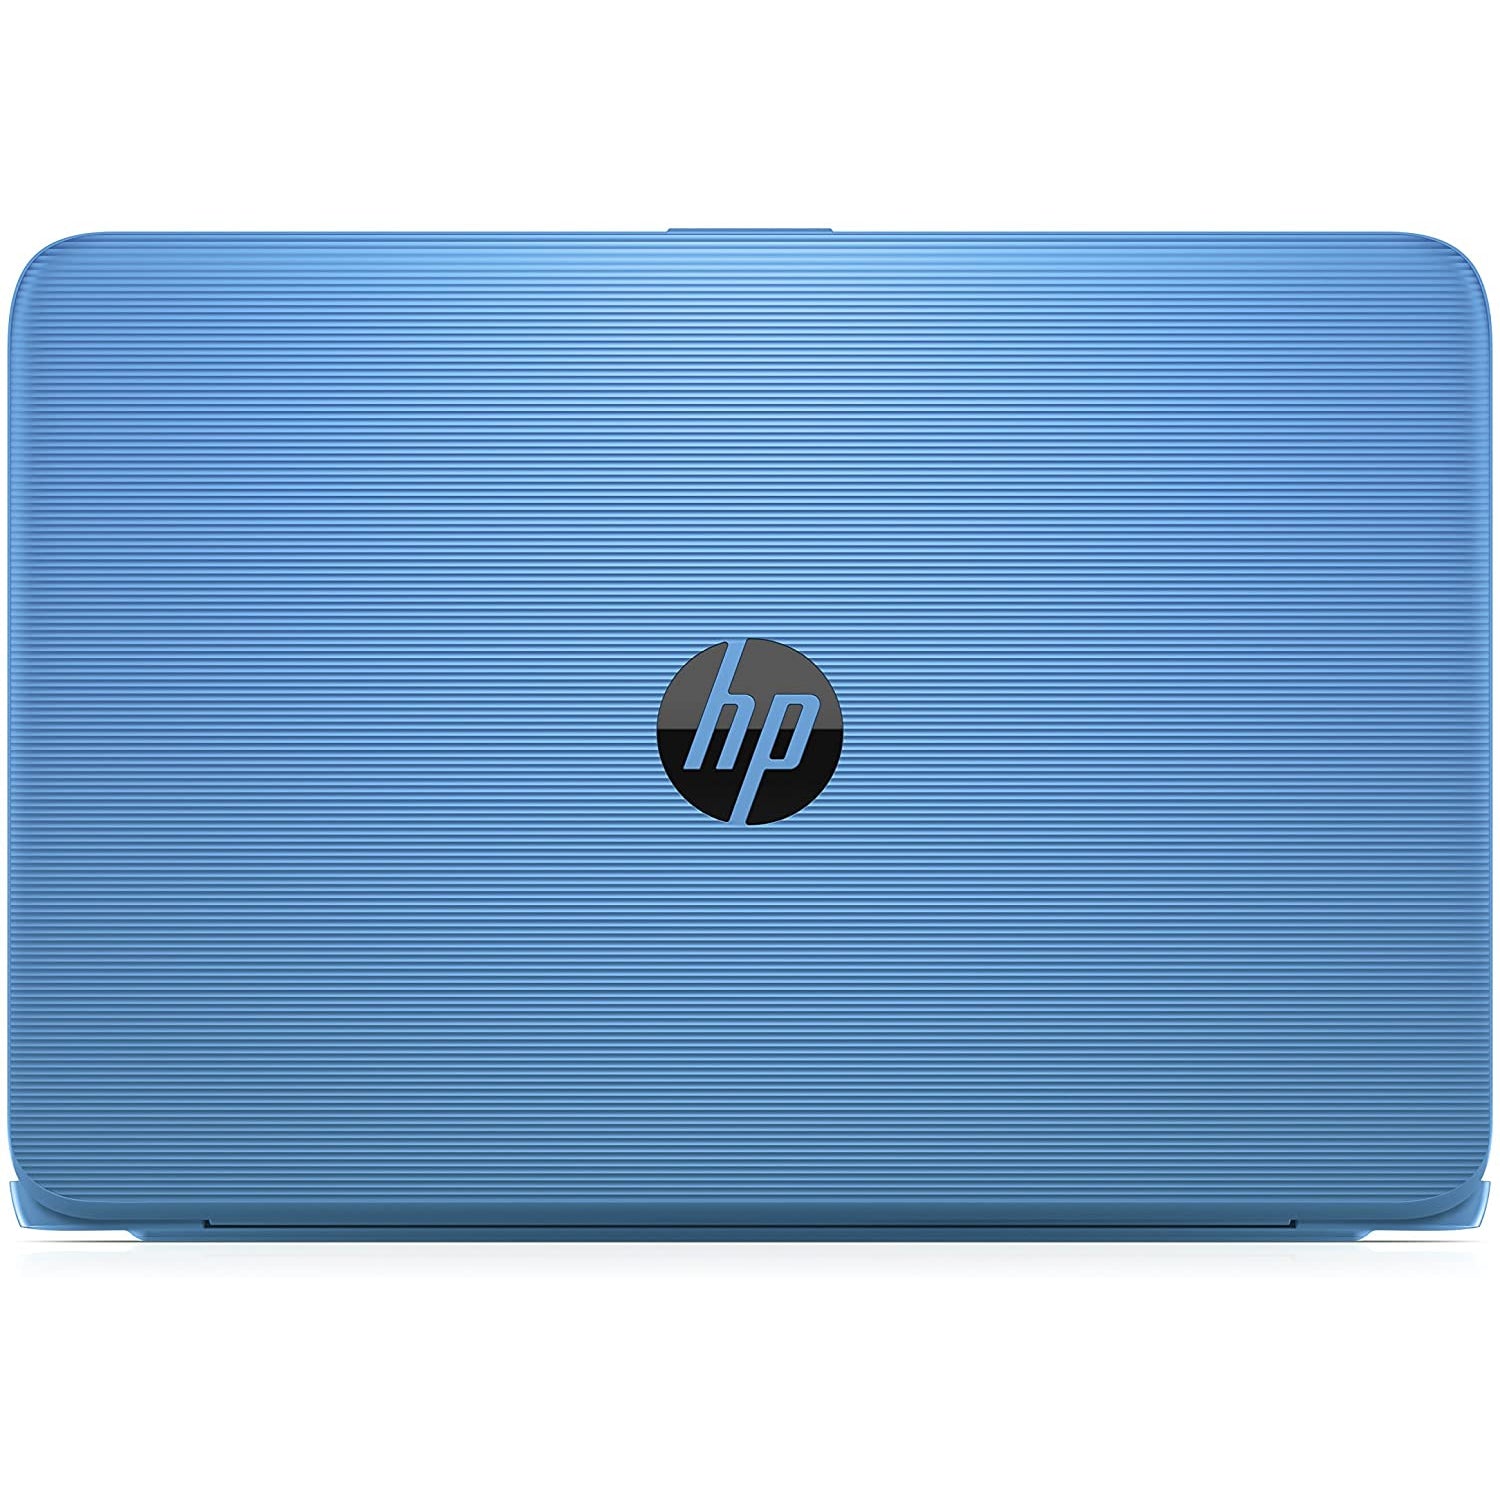 HP14-AX050SA (Y3W23EA#ABU) - 14" Laptop Intel Celeron N3060 , 4GB RAM, 32GB, Aqua Blue